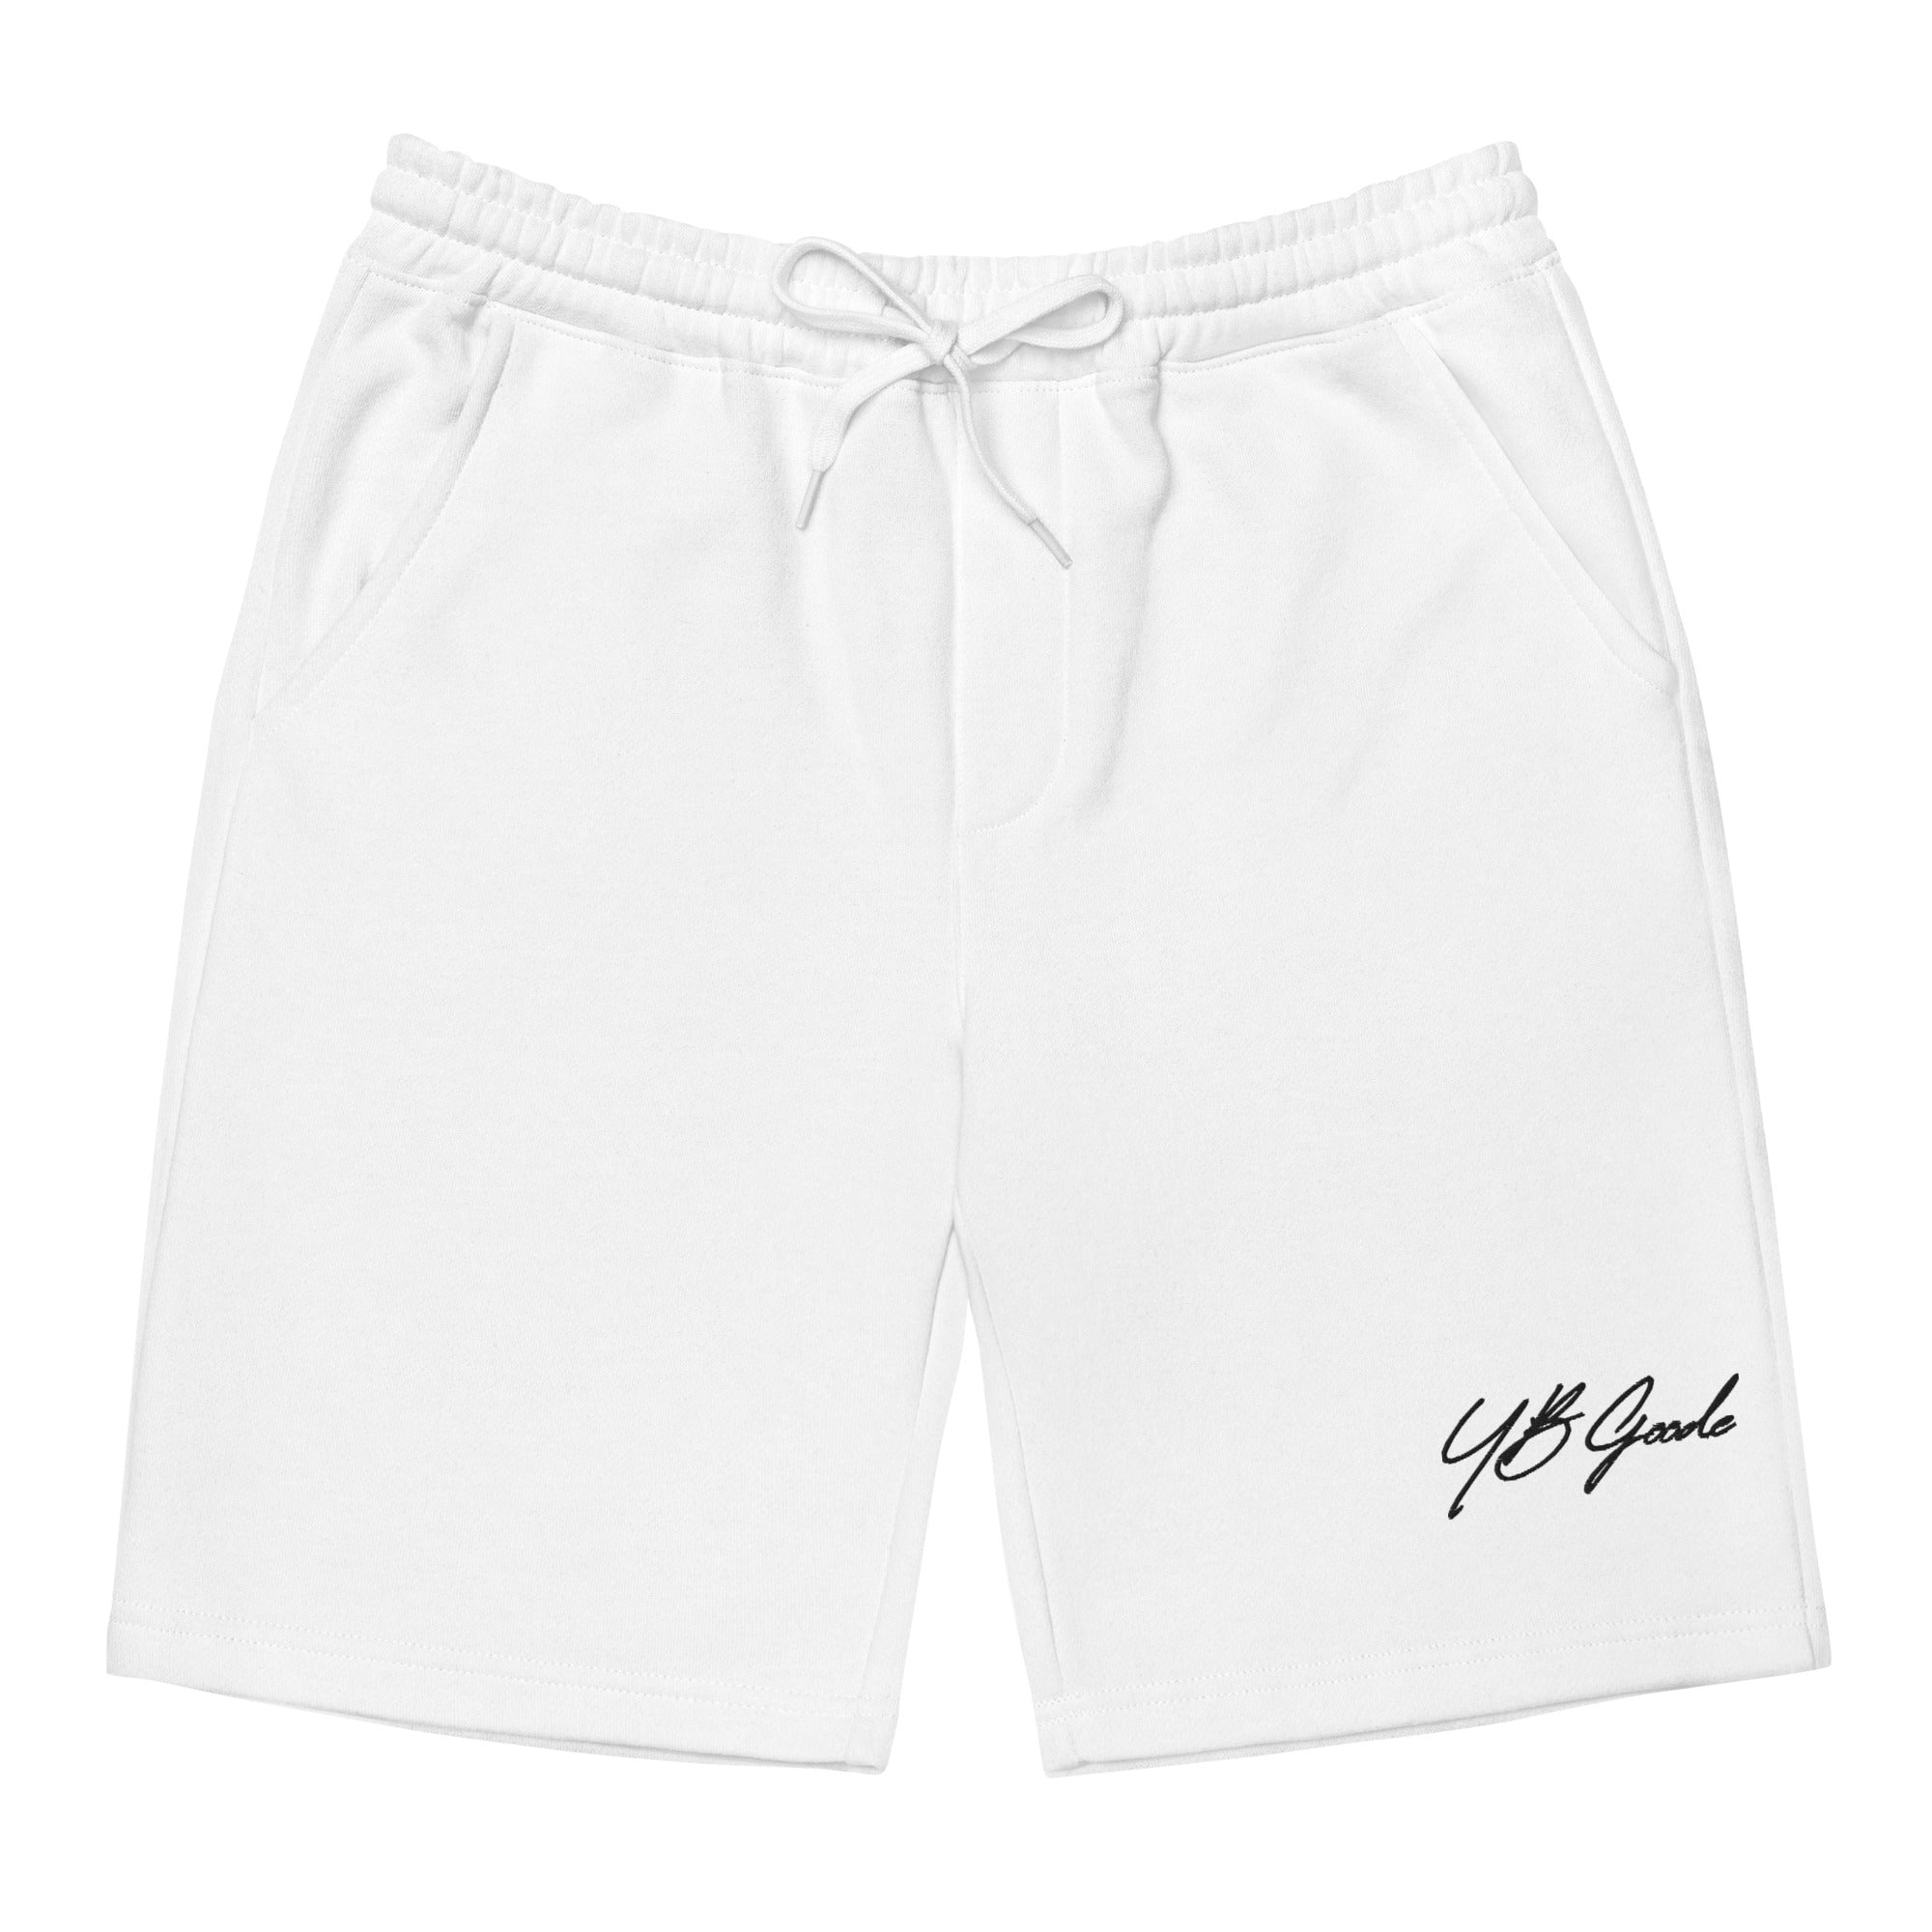 YB Goode Signature fleece shorts (white)